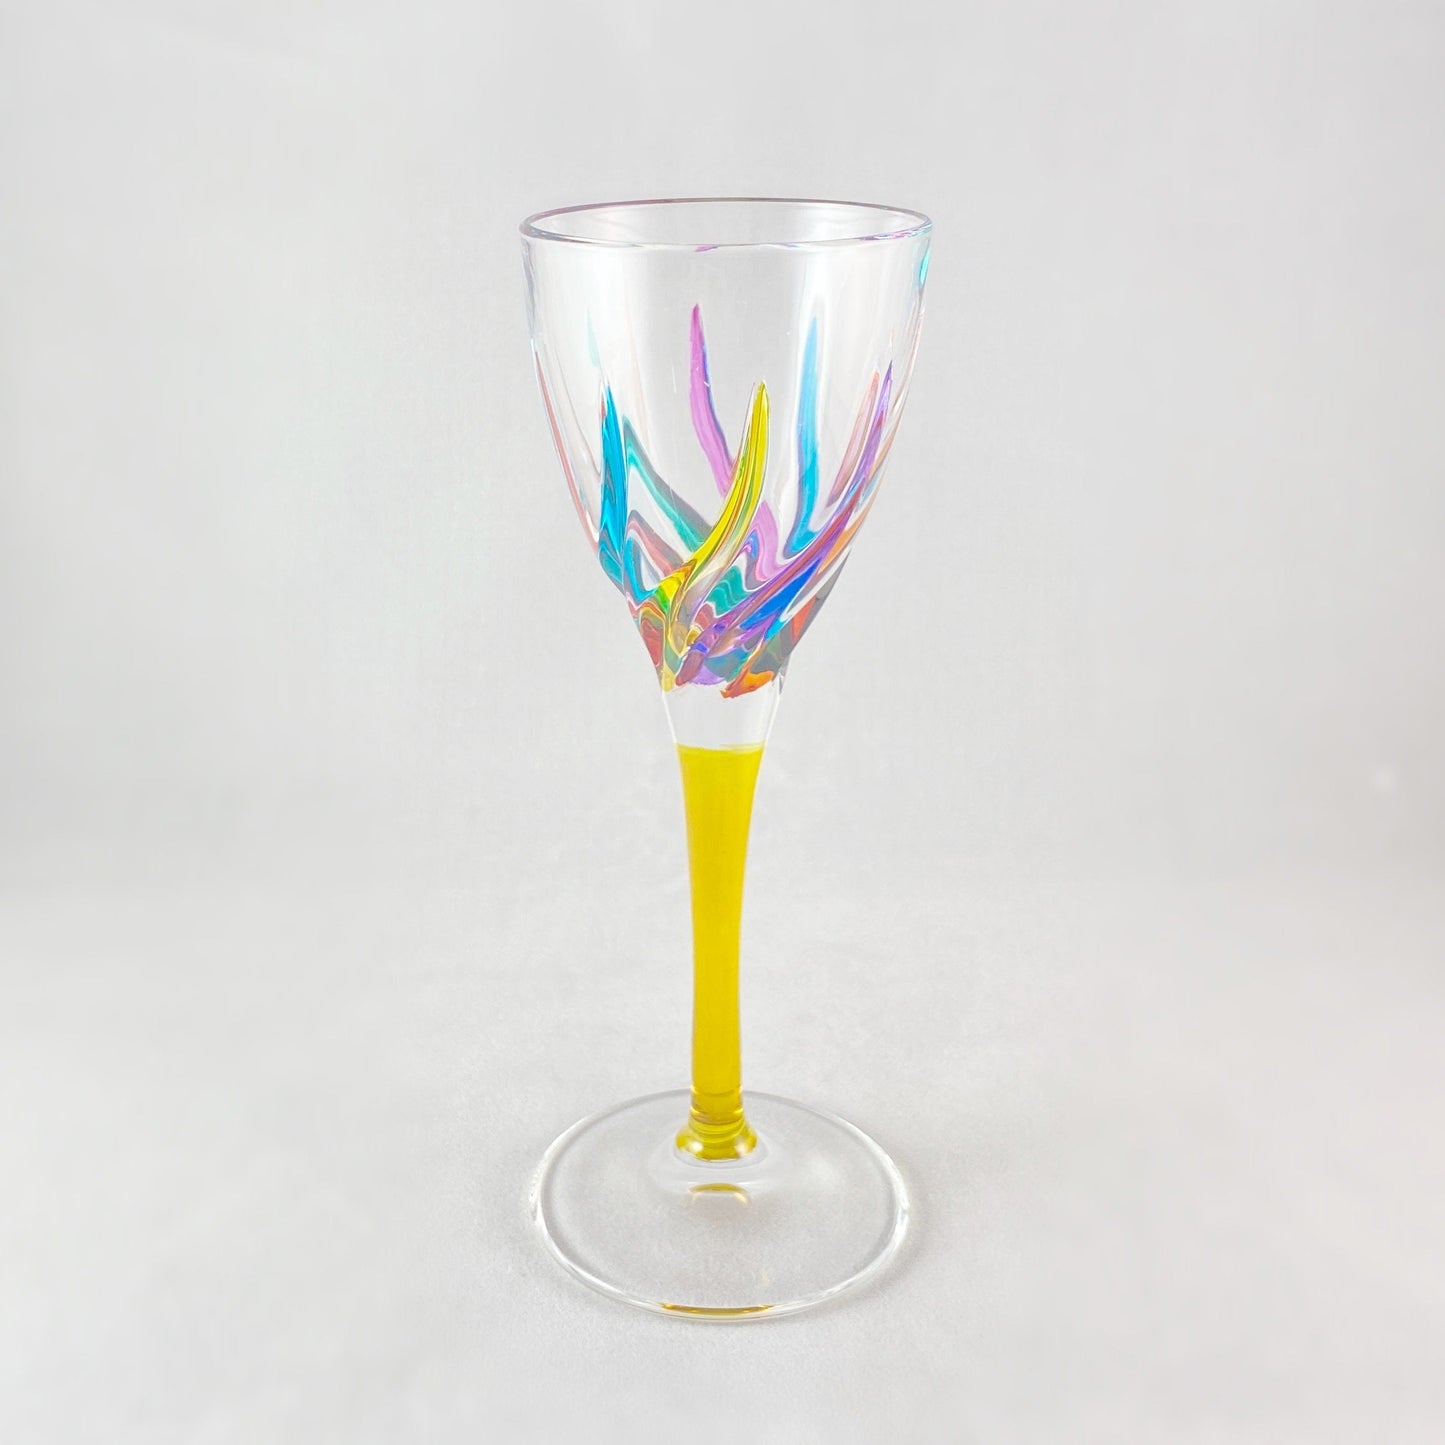 Yellow Stem Venetian Glass Trix Cordial Liquor Glass - Handmade in Italy, Colorful Murano Glass